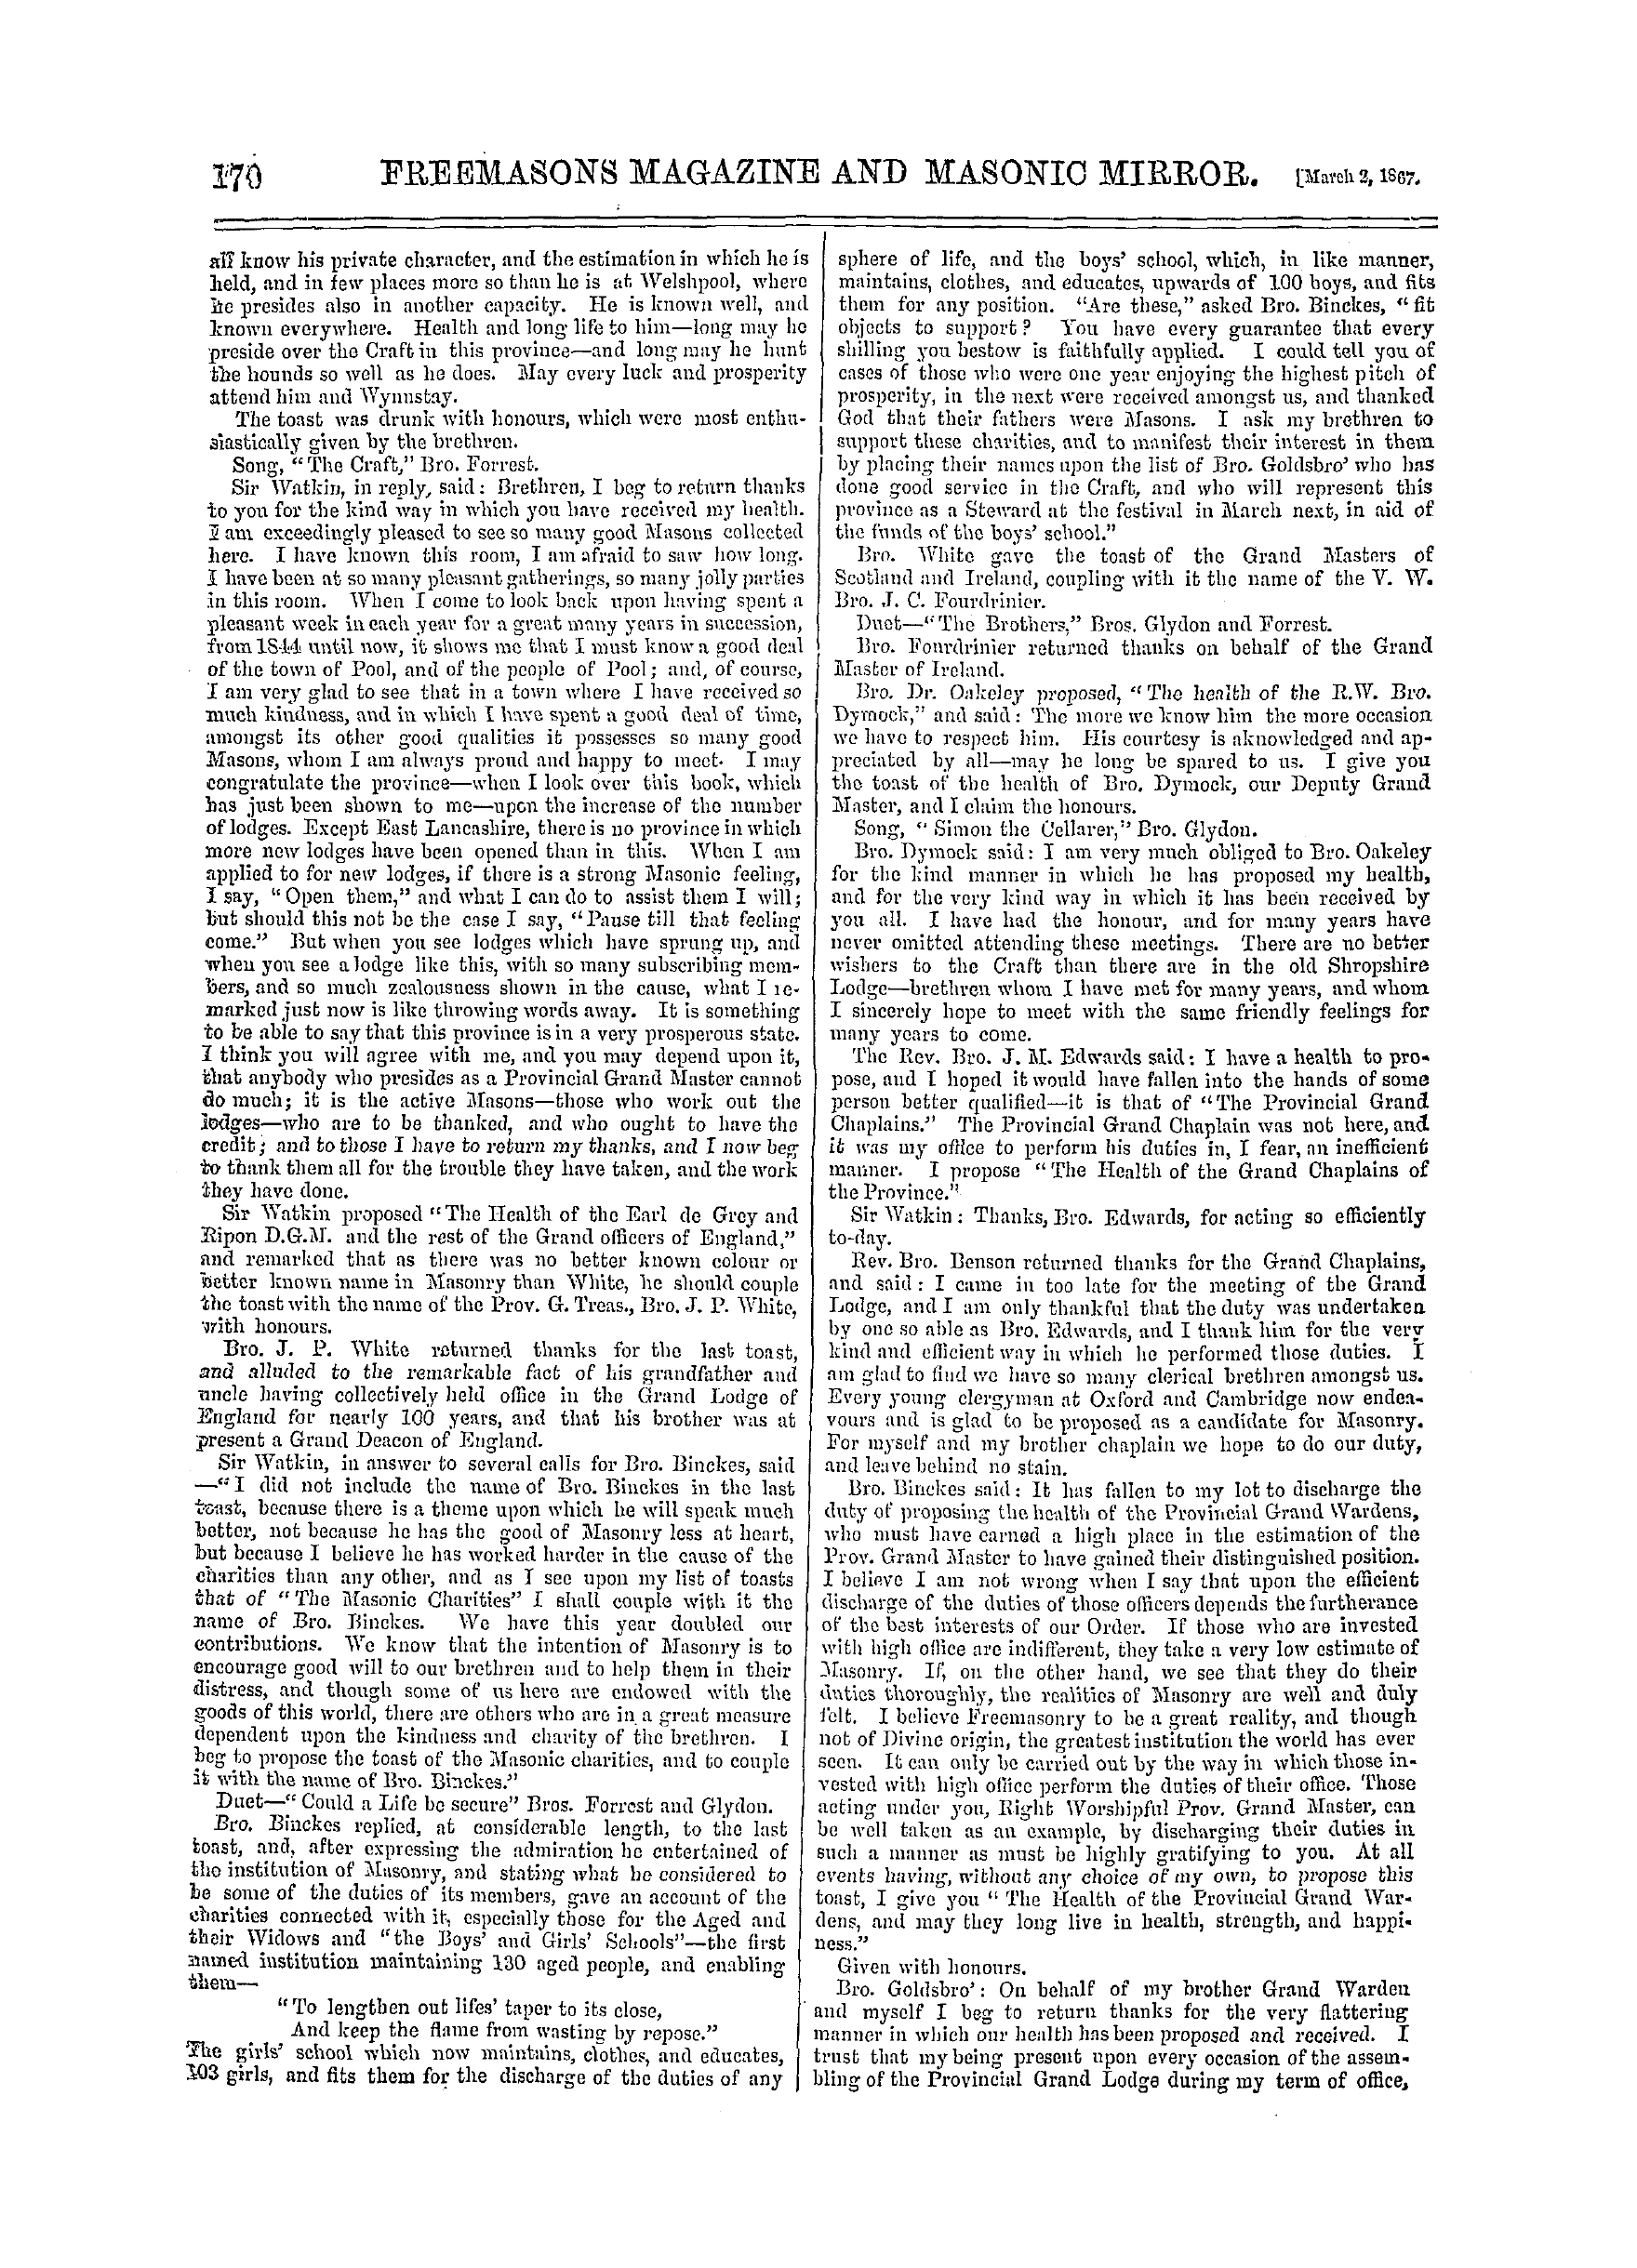 The Freemasons' Monthly Magazine: 1867-03-02 - Provincial.